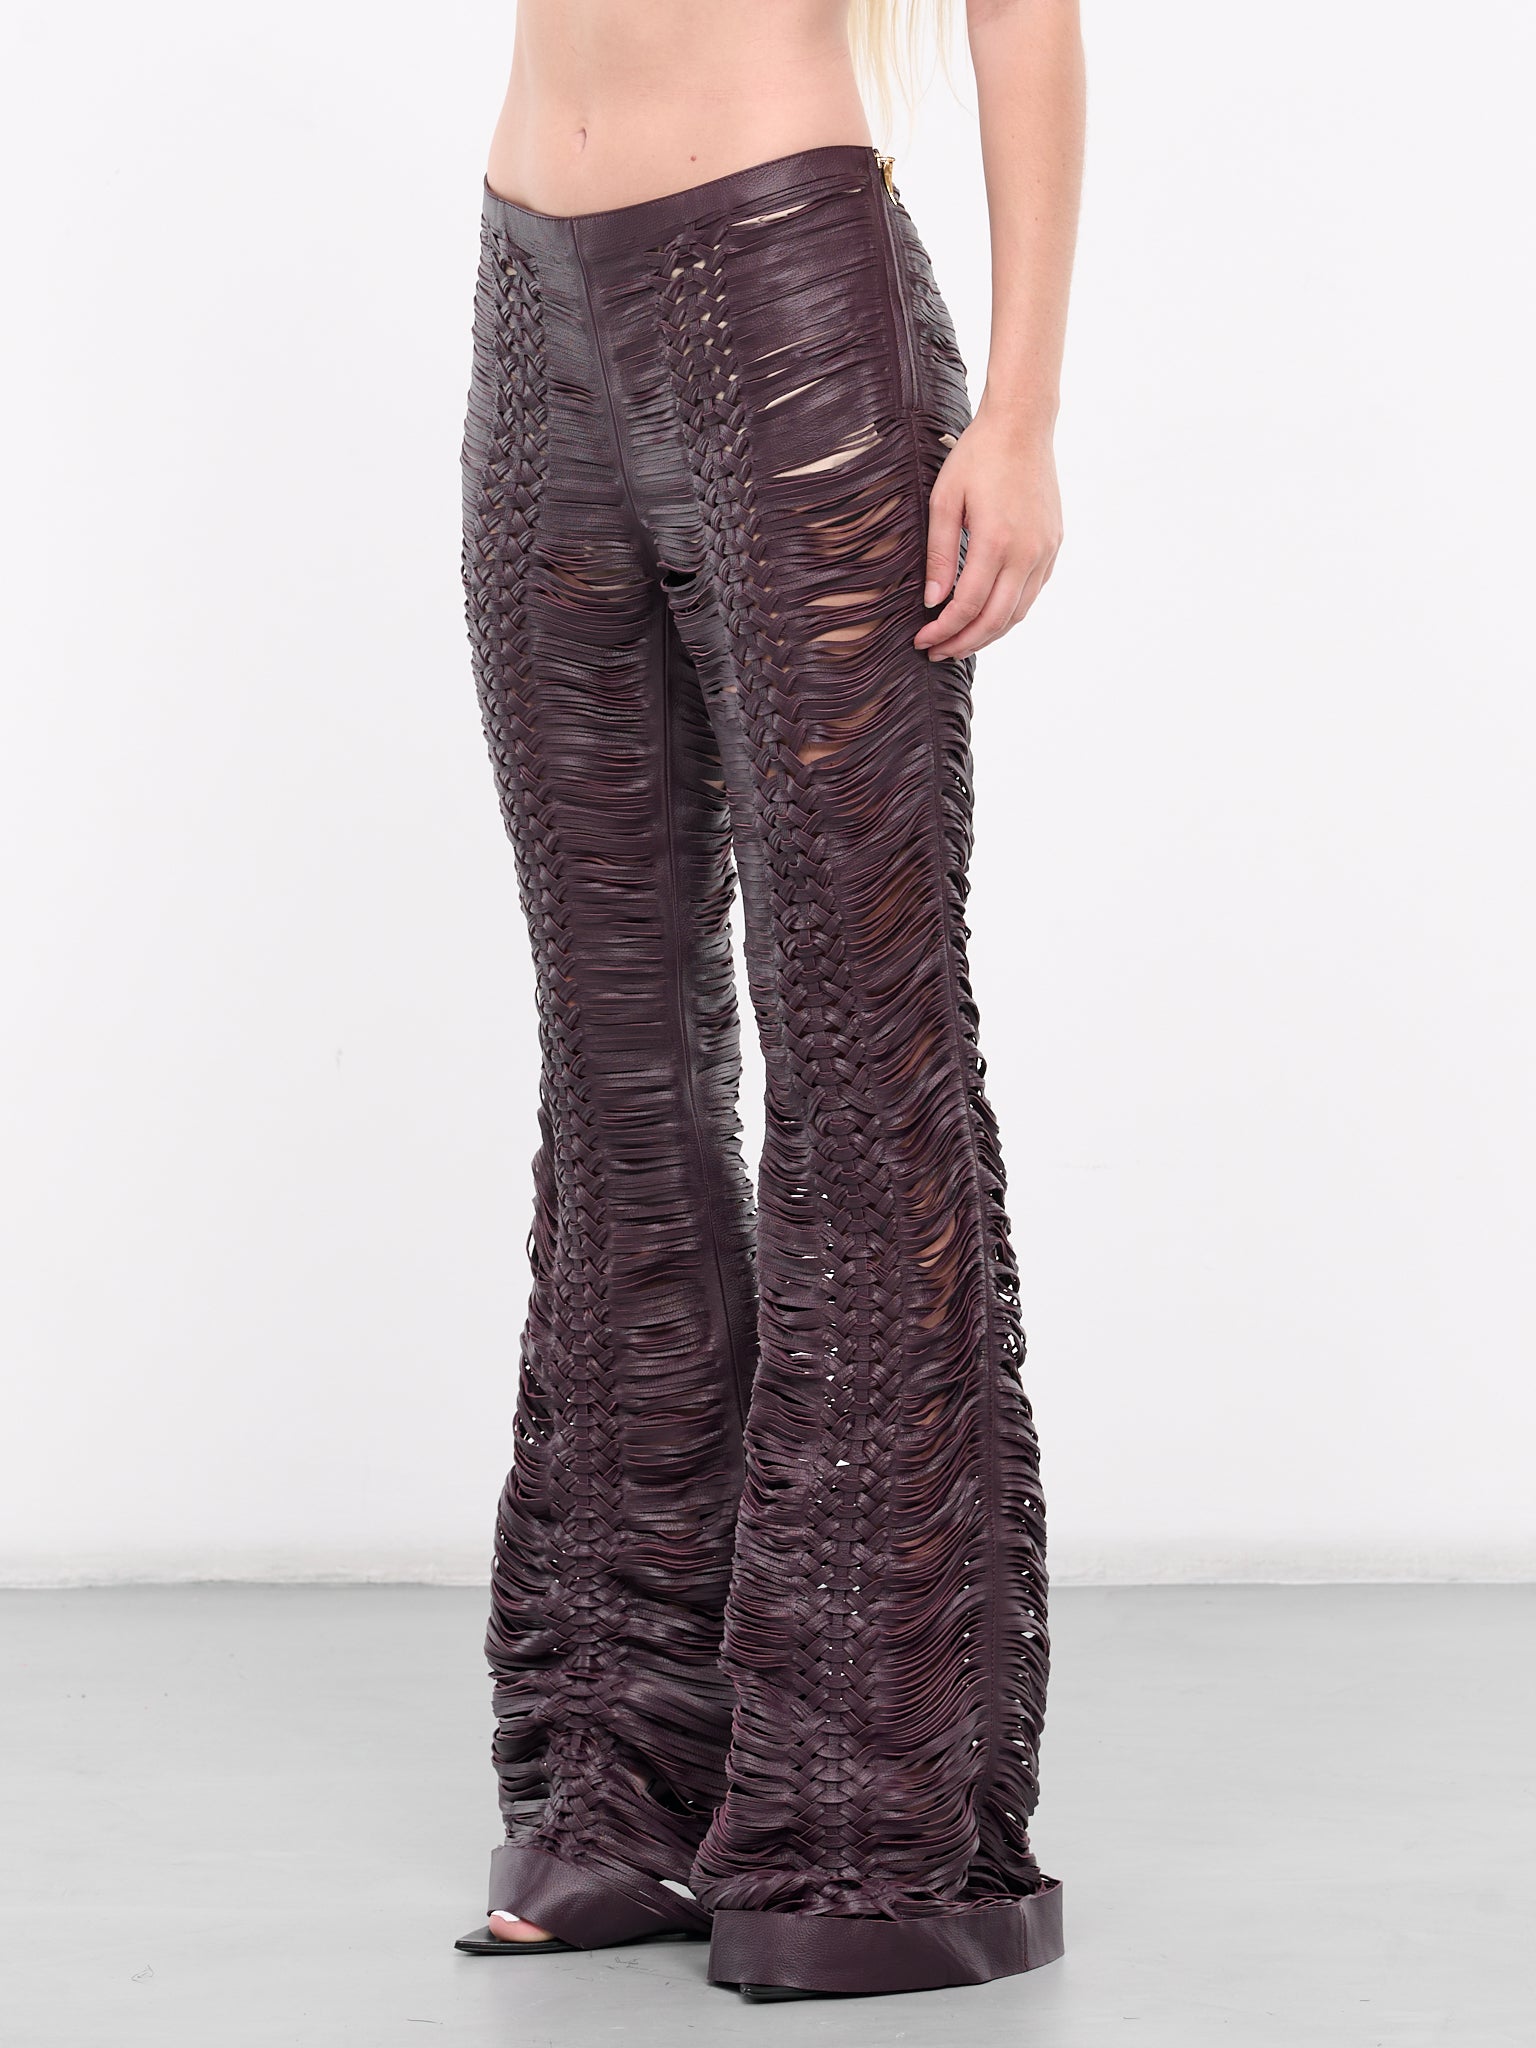 Leather Lace Pants (SWP201-PN002-AUBERGINE)